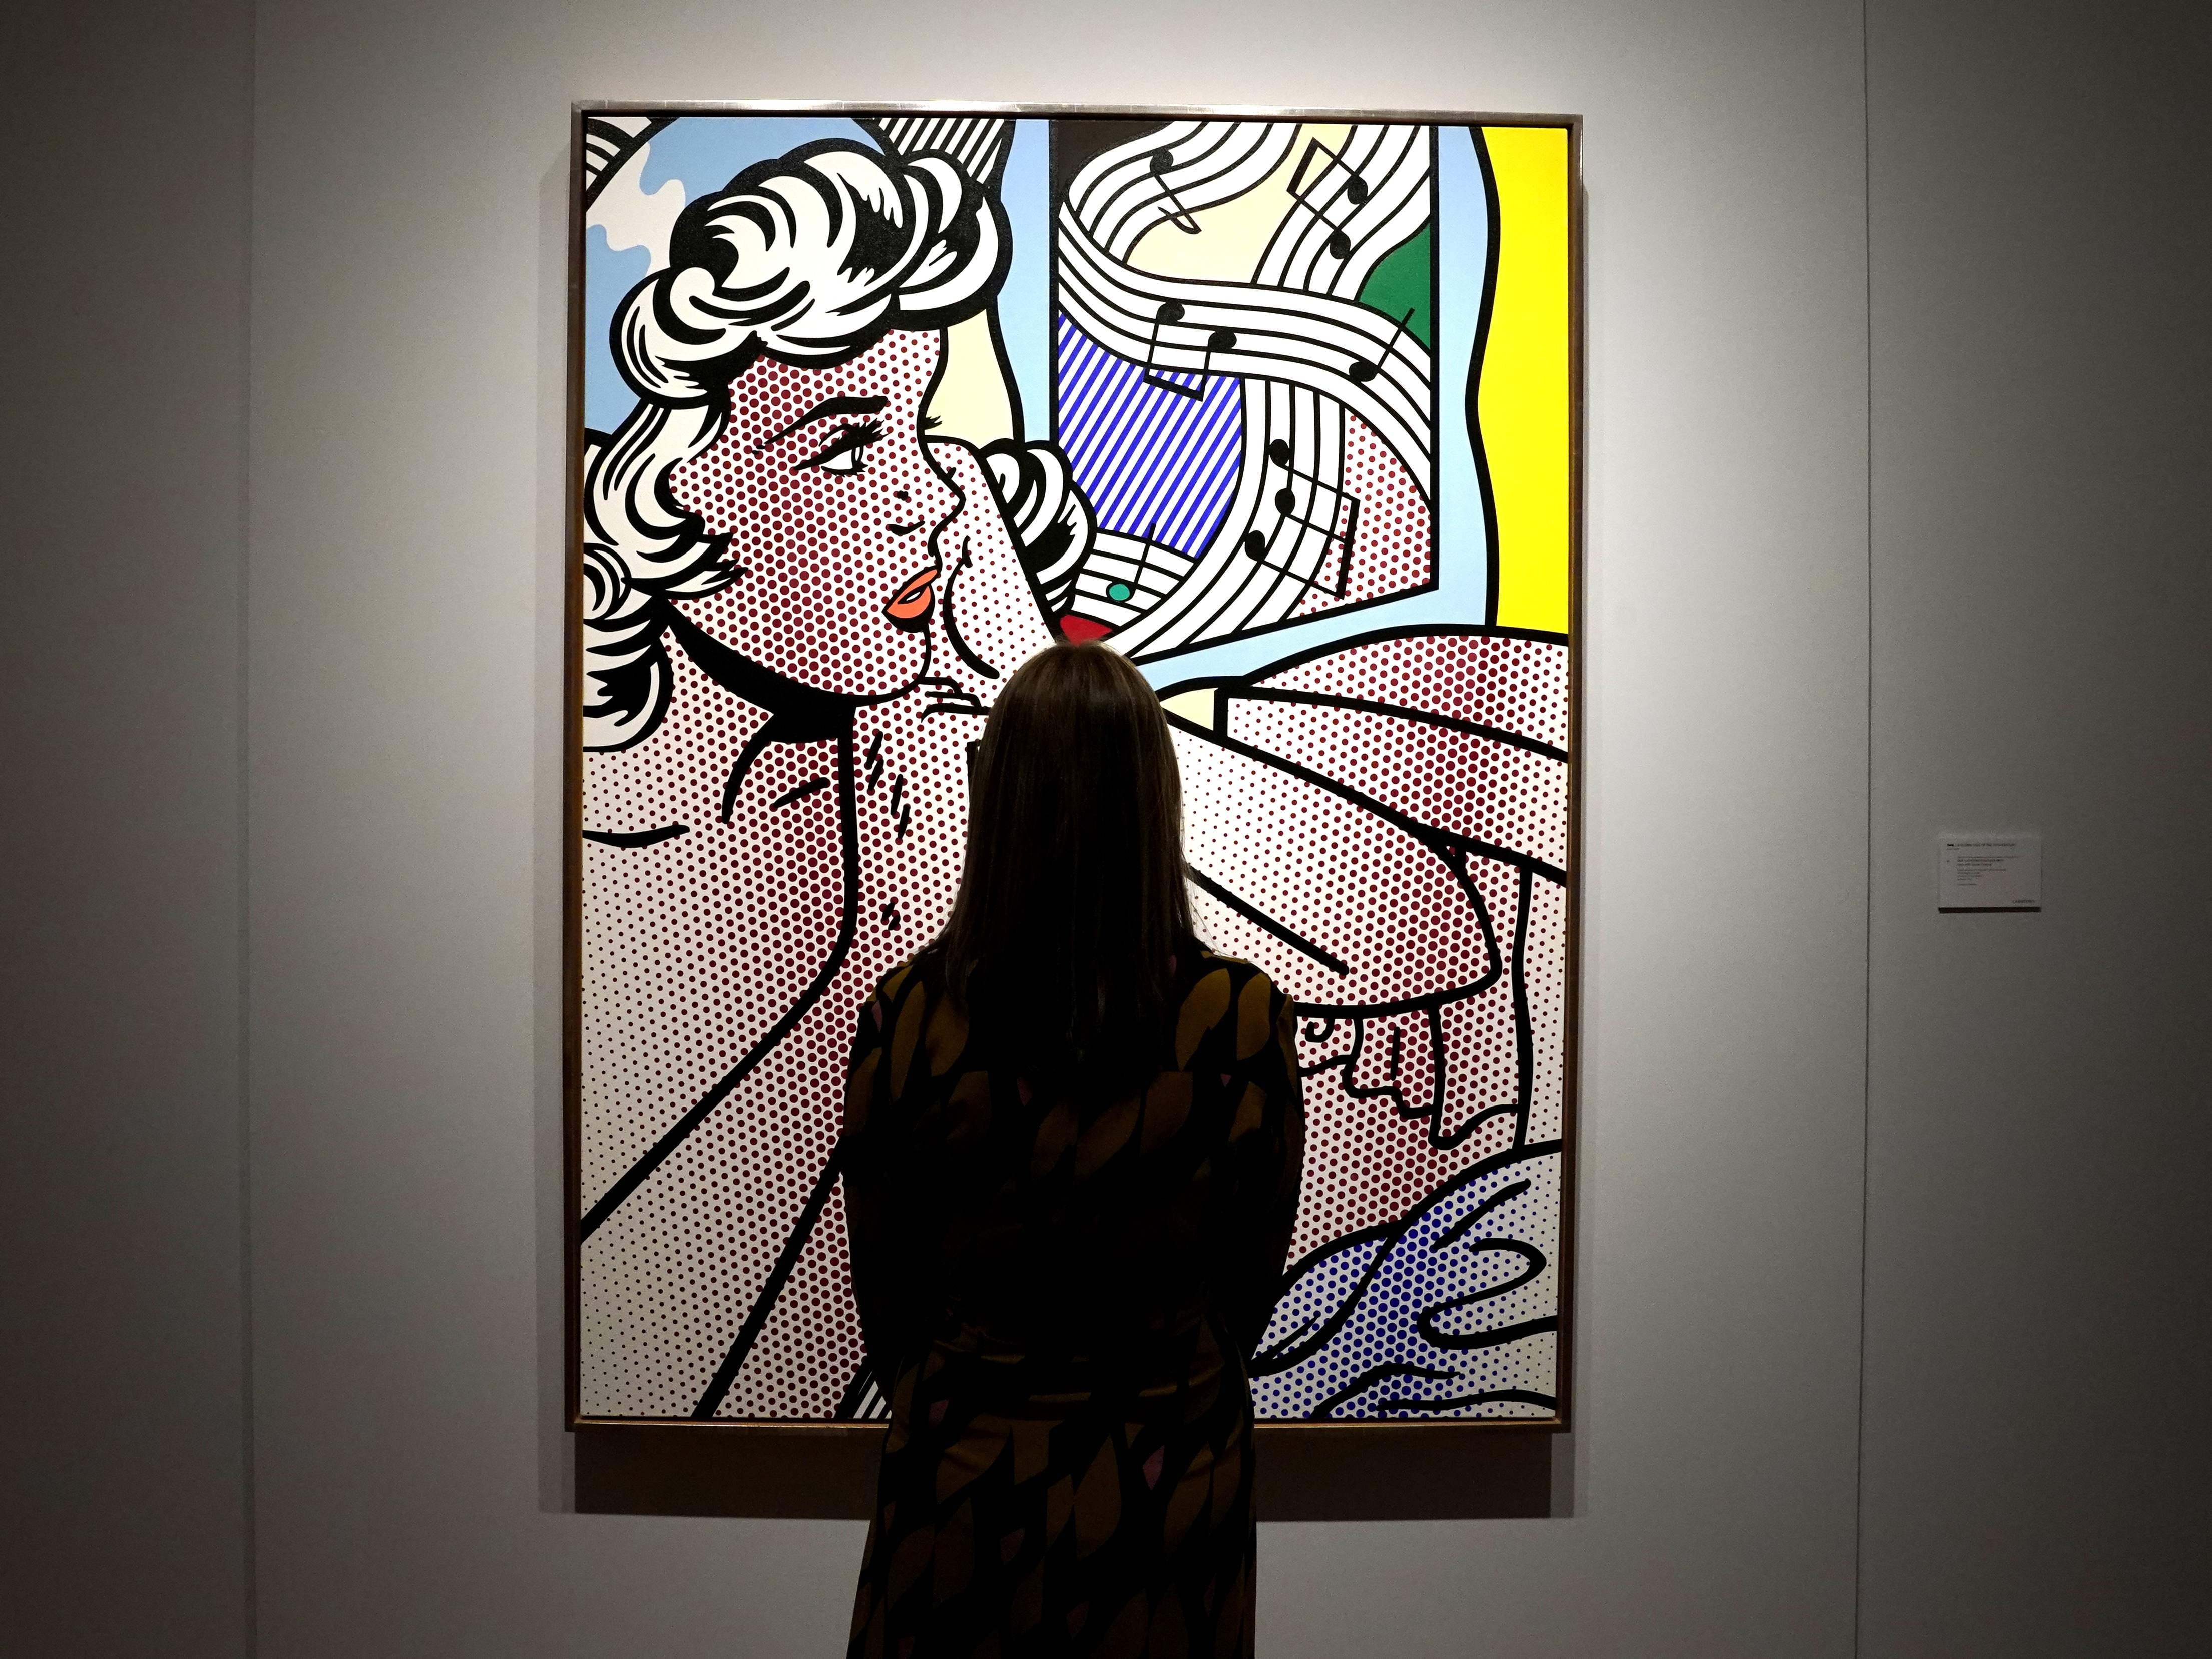 Christie S Online Auction Roy Lichtenstein S Nude With Joyous Painting Big Hit Christie S